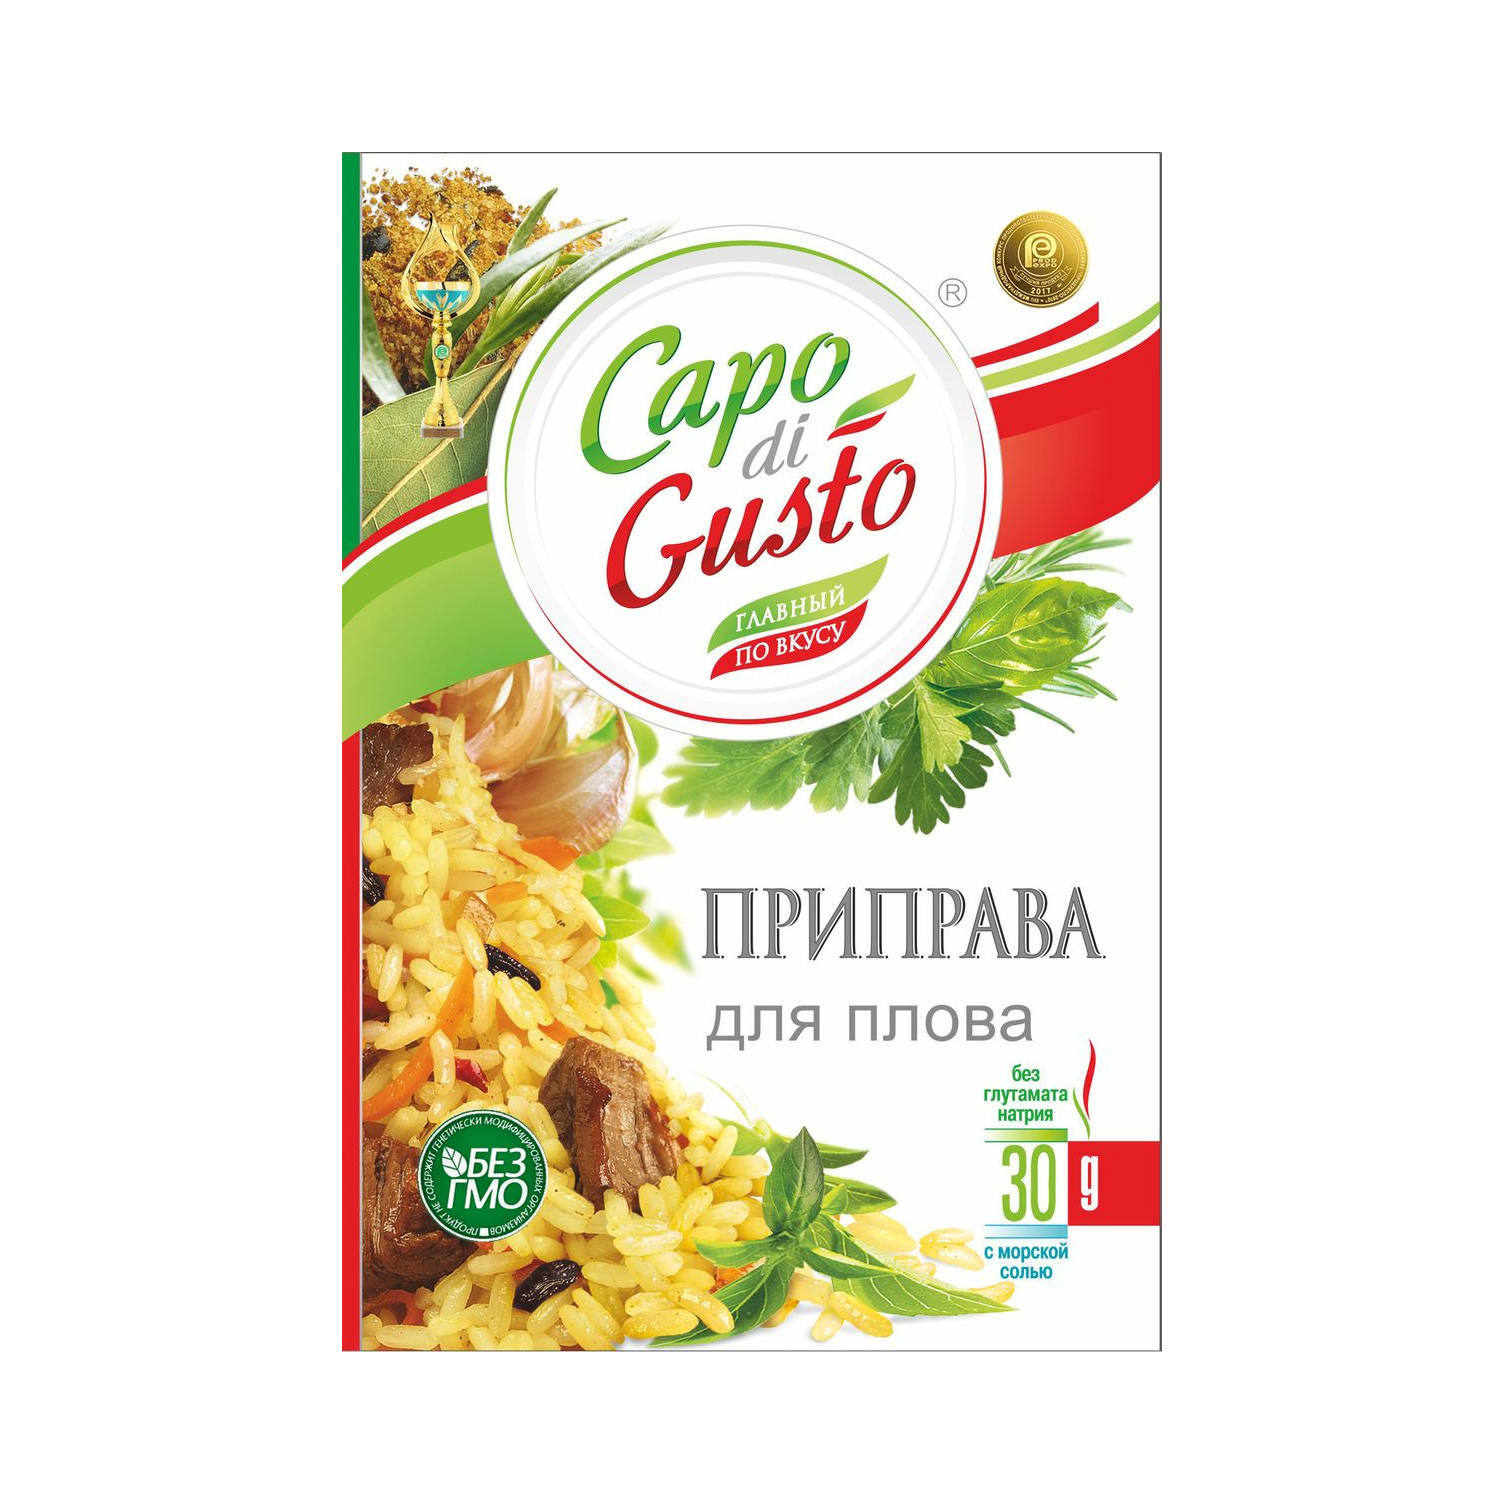 Приправа Capo di Gusto для плова 30 г перец черный горошек capo di gusto 20 г